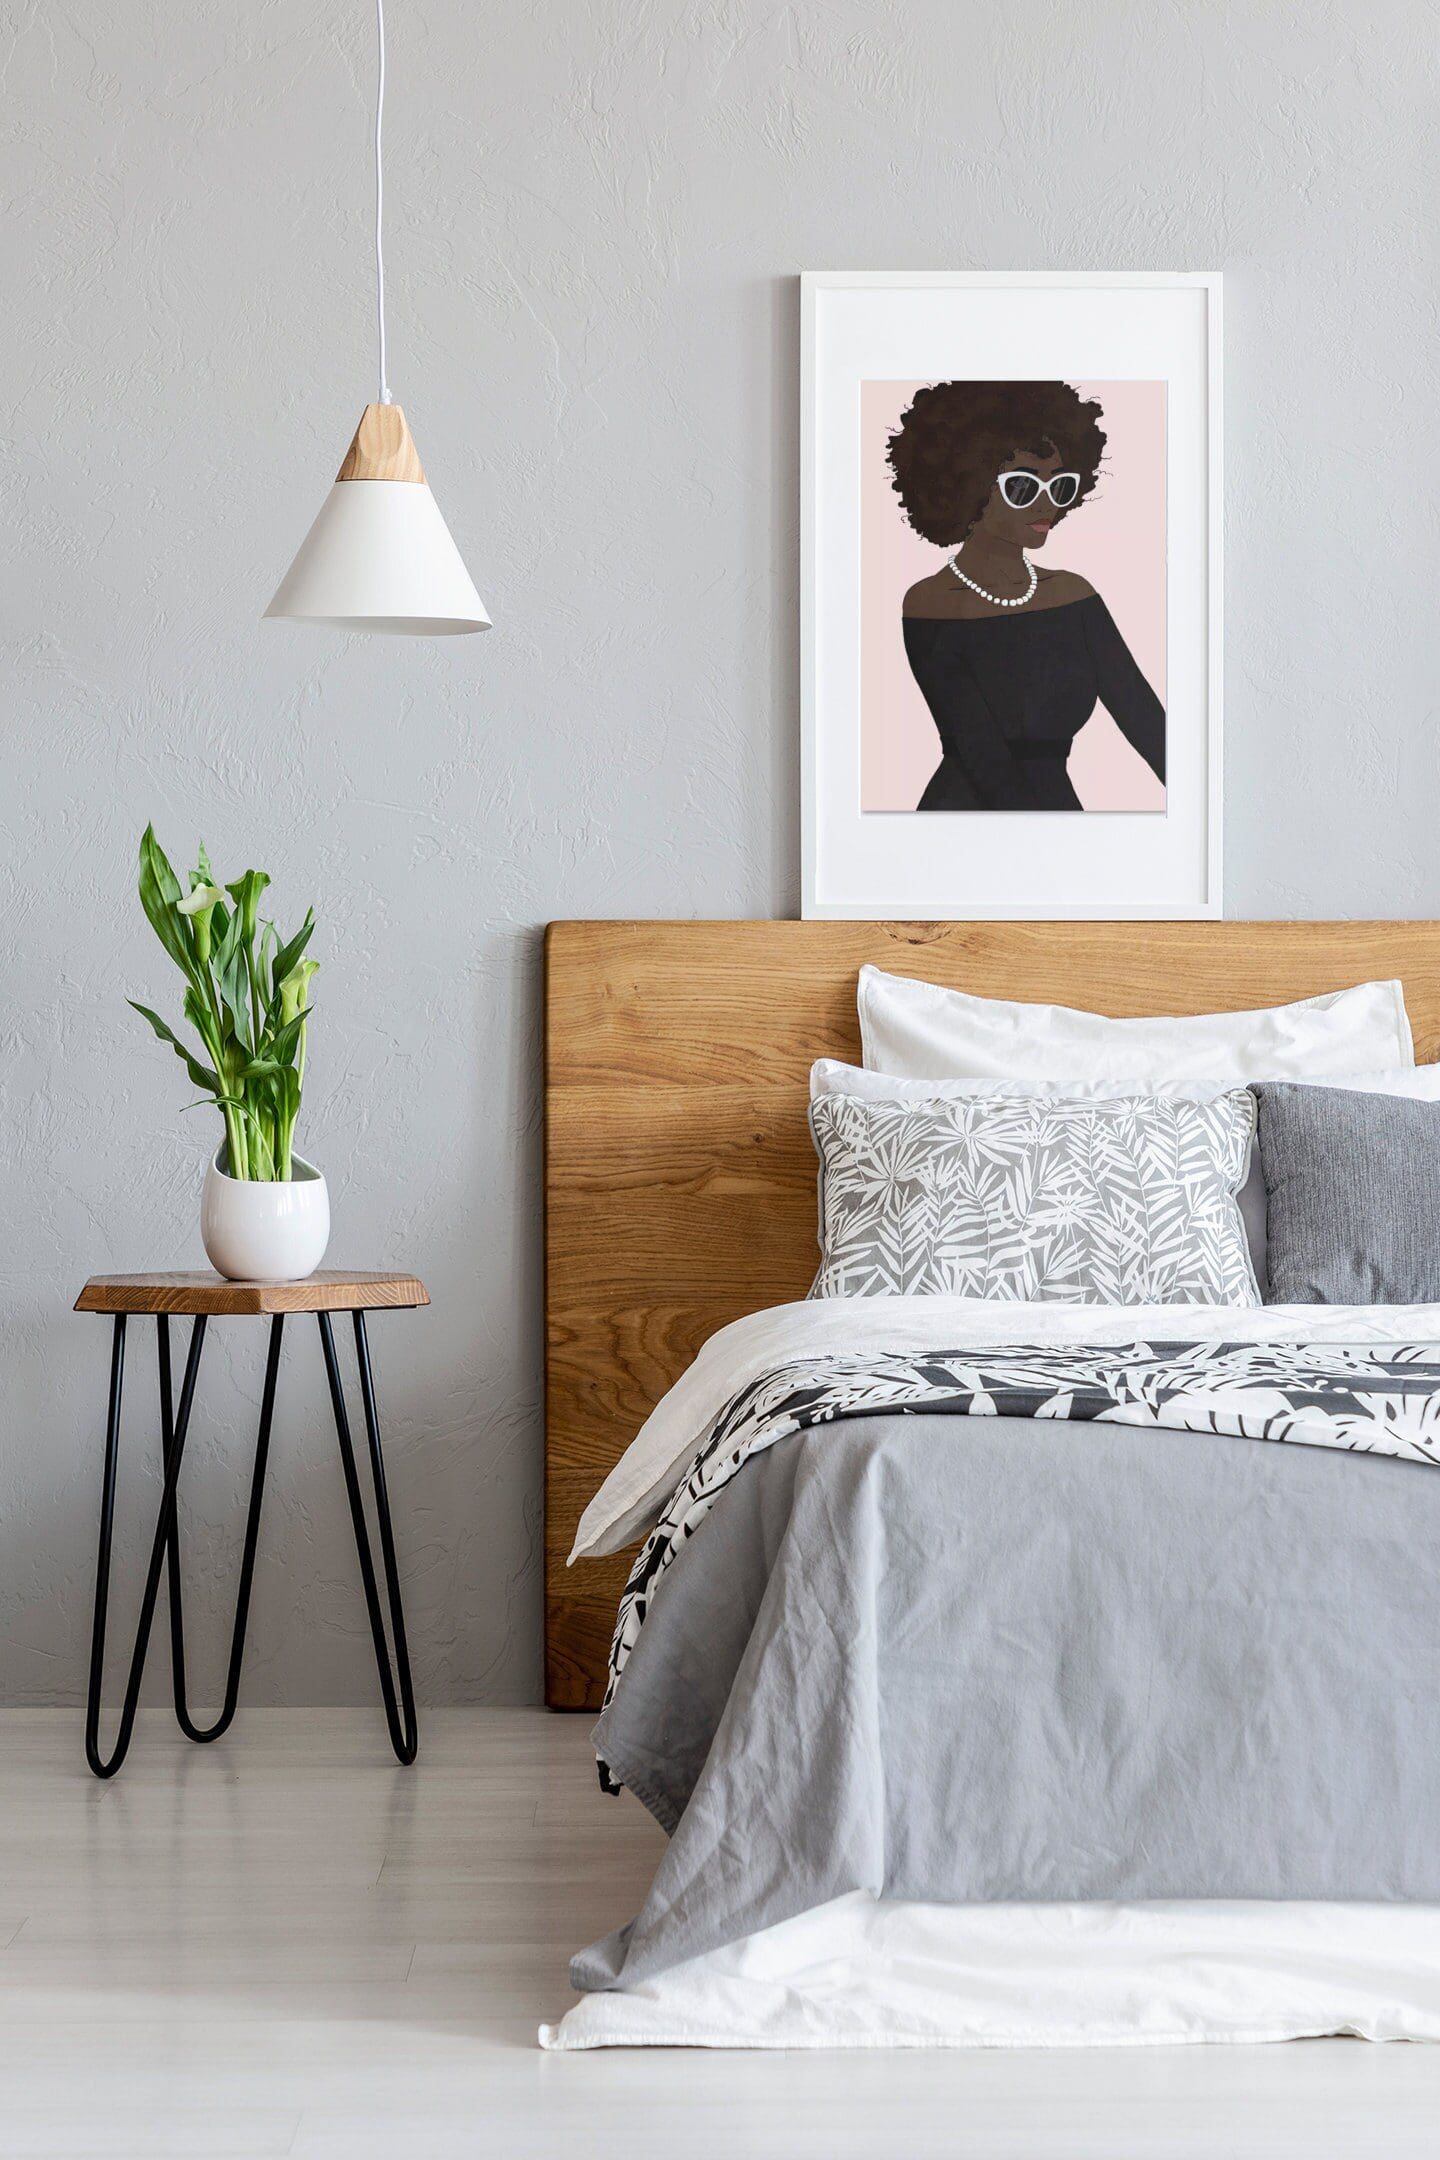 Black Afro Woman Canvas Wall Print